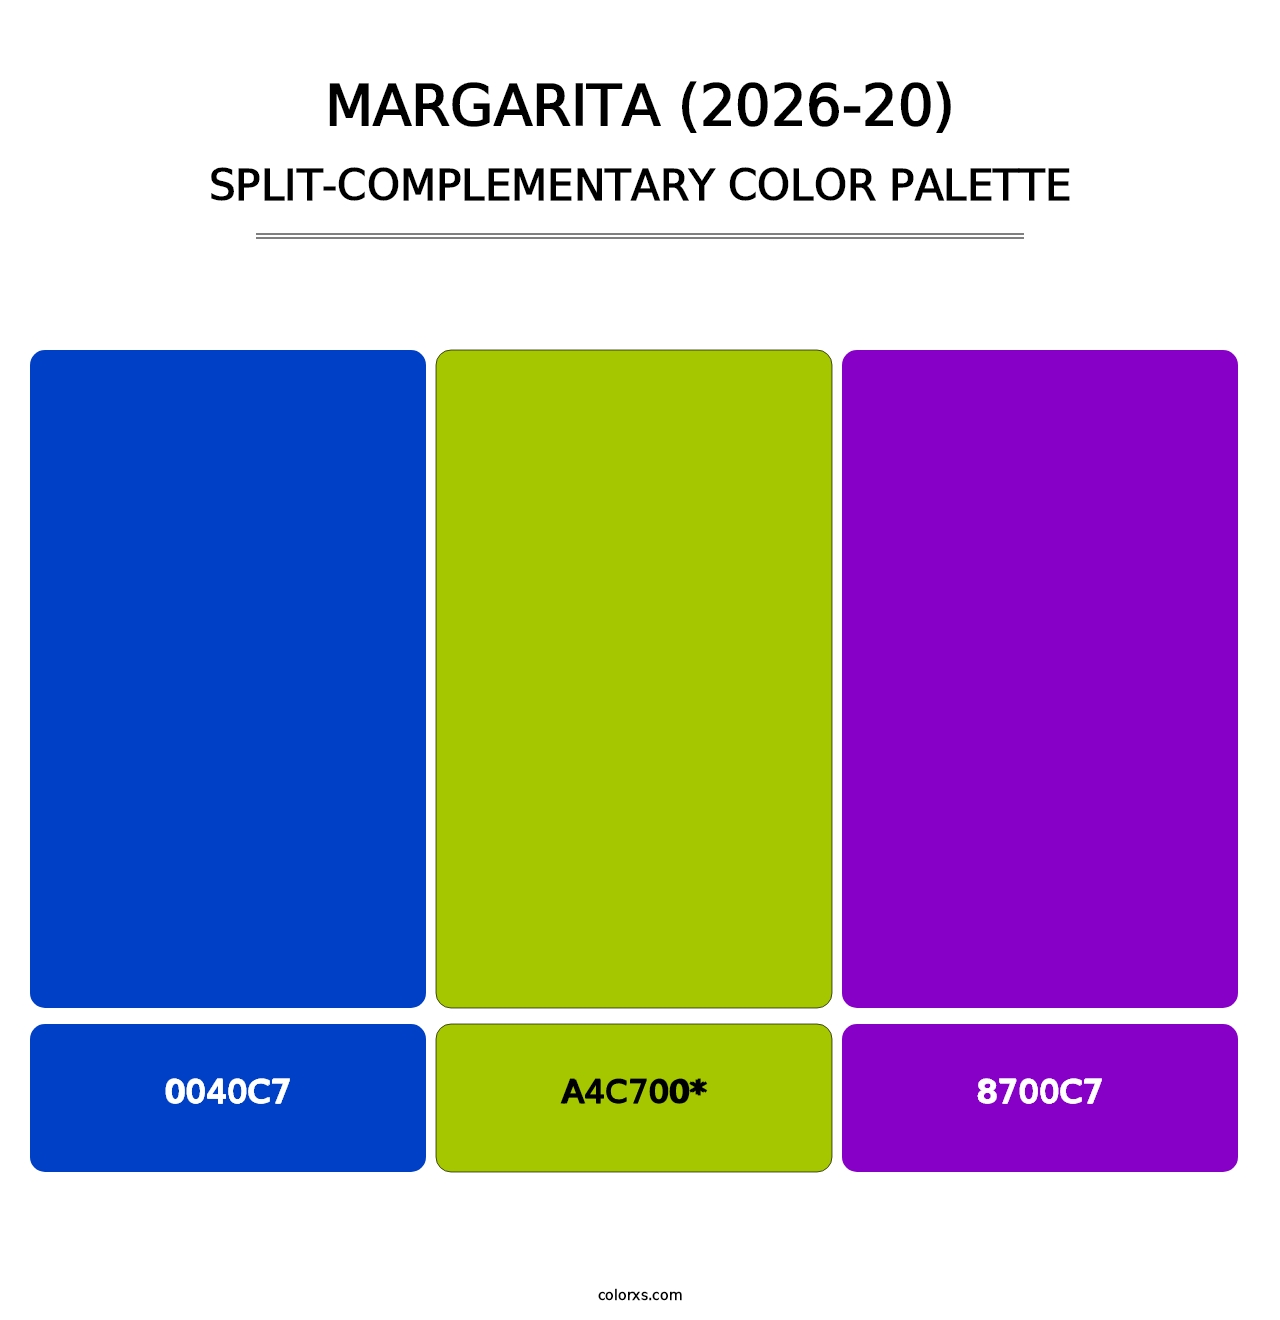 Margarita (2026-20) - Split-Complementary Color Palette